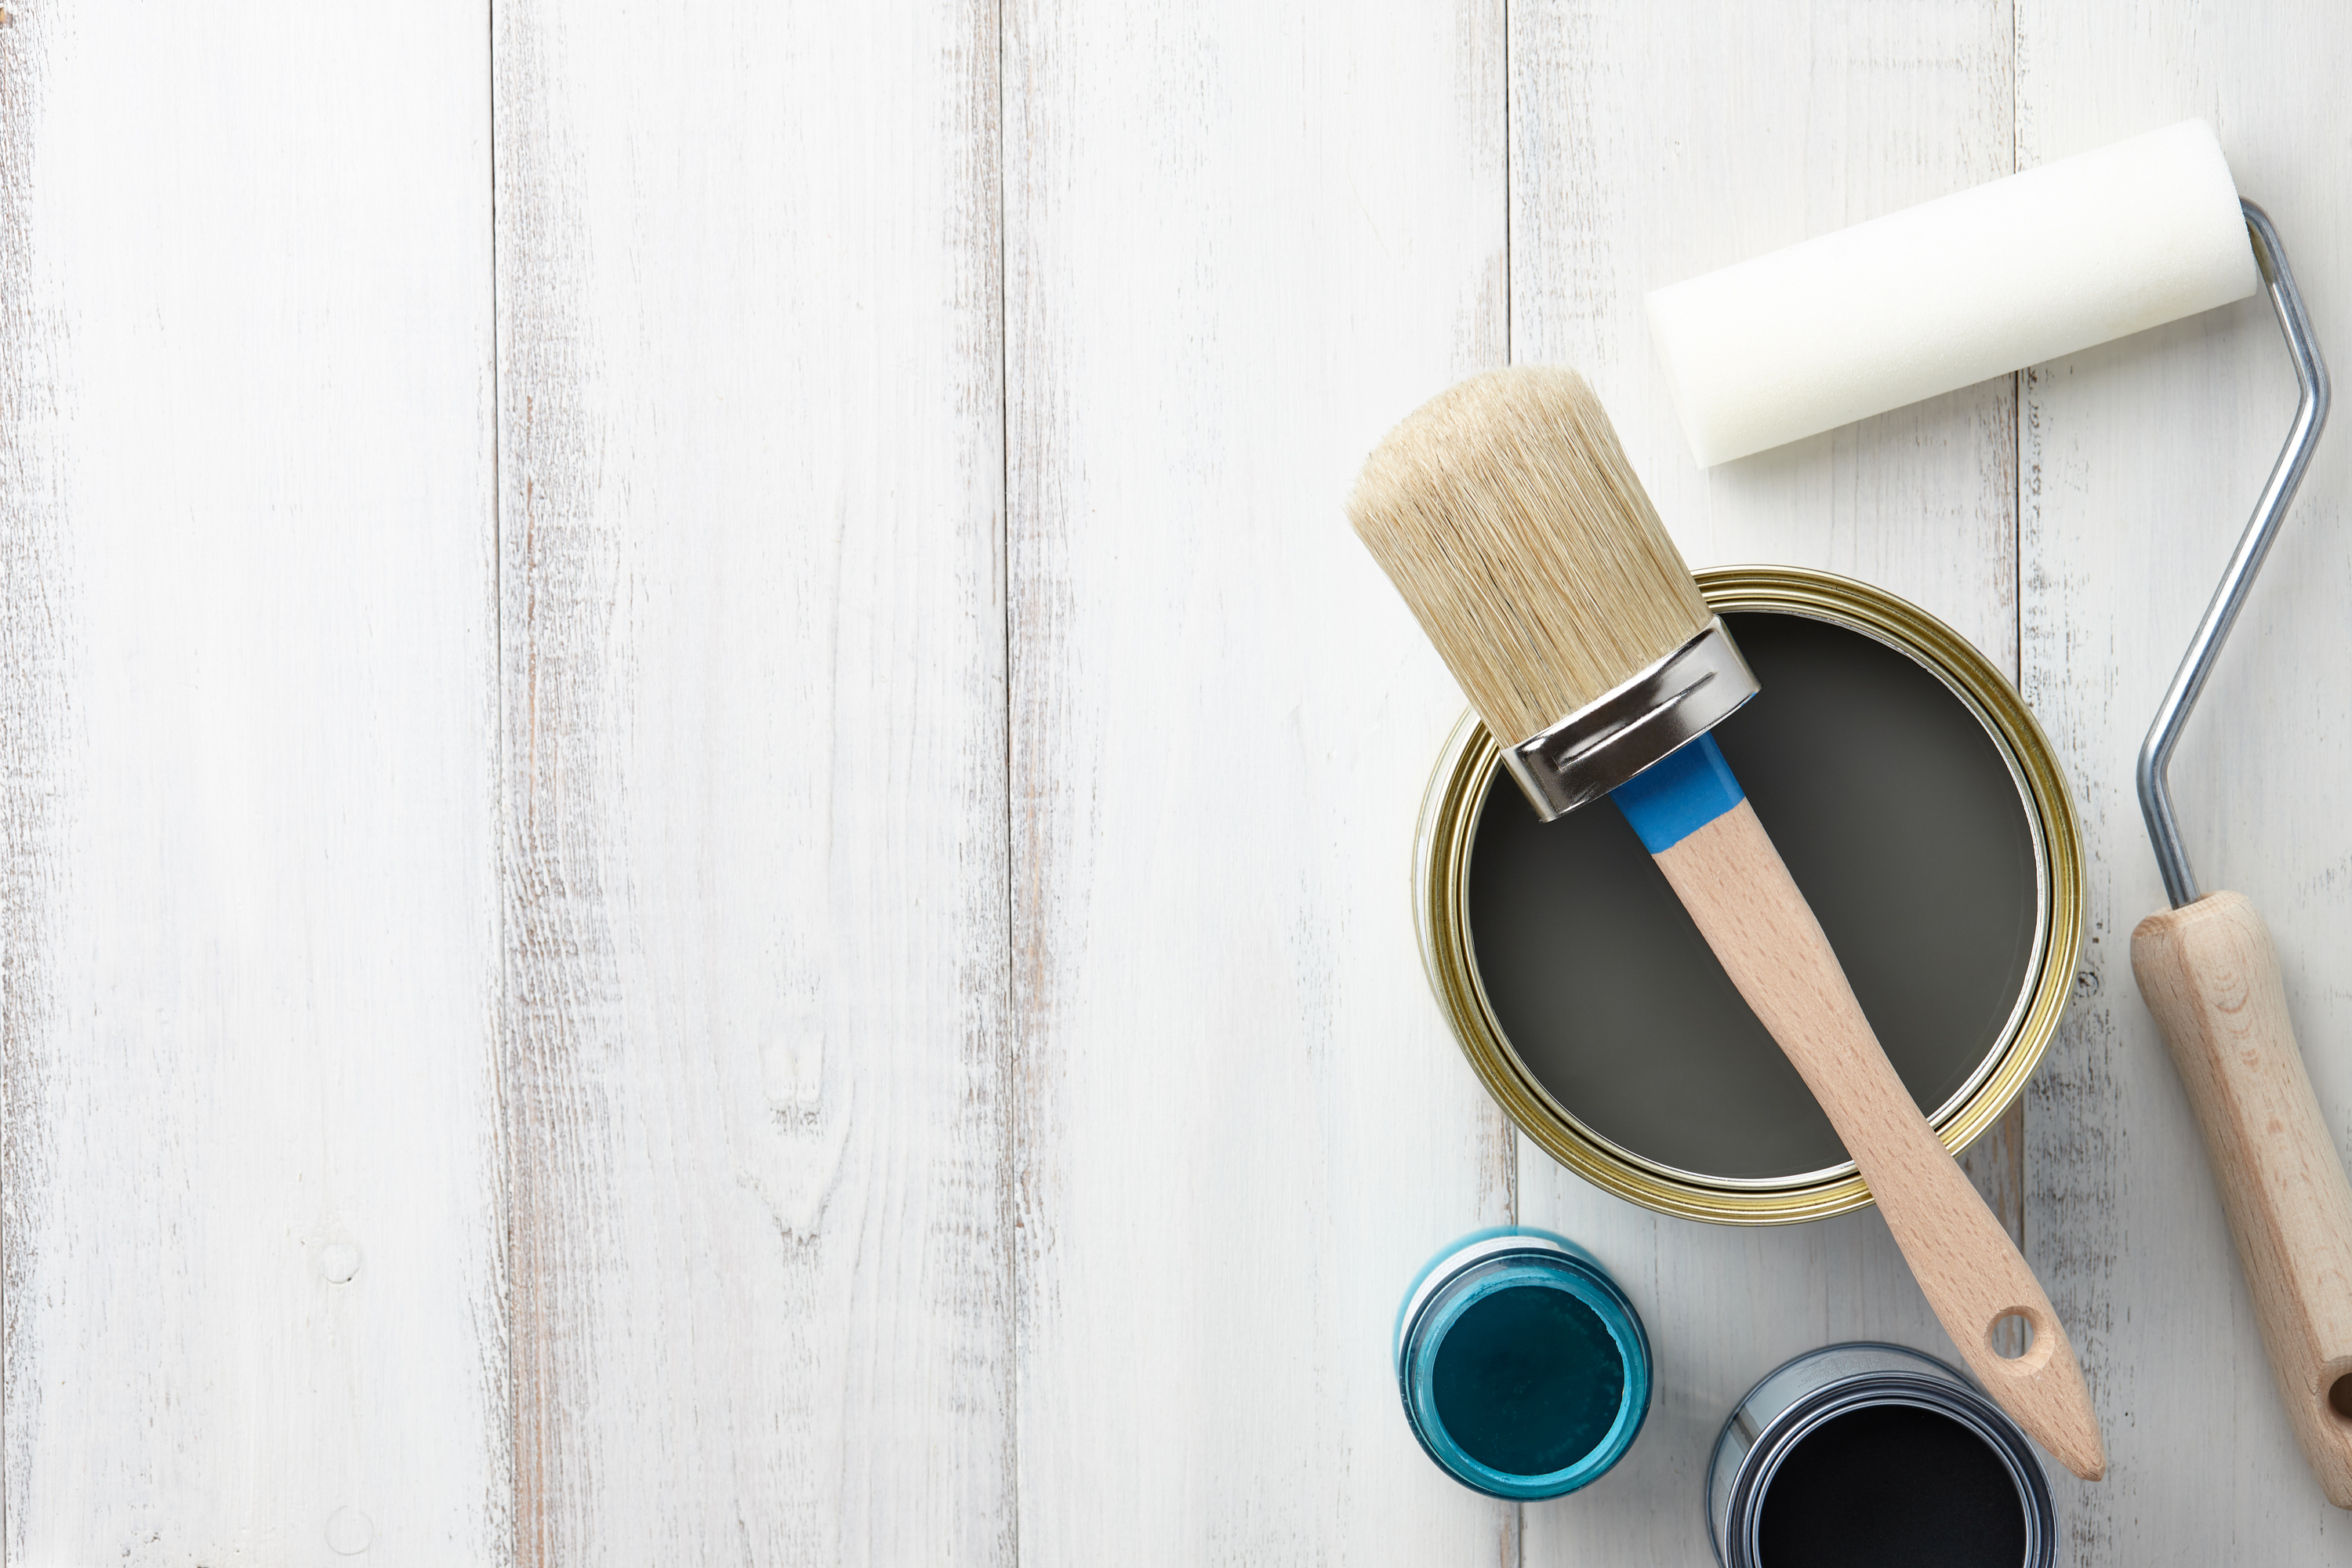 laminate | how to paint laminate furniture | paint laminate furniture | laminate furniture | painted furniture | paint | painting tips | tips and tricks 